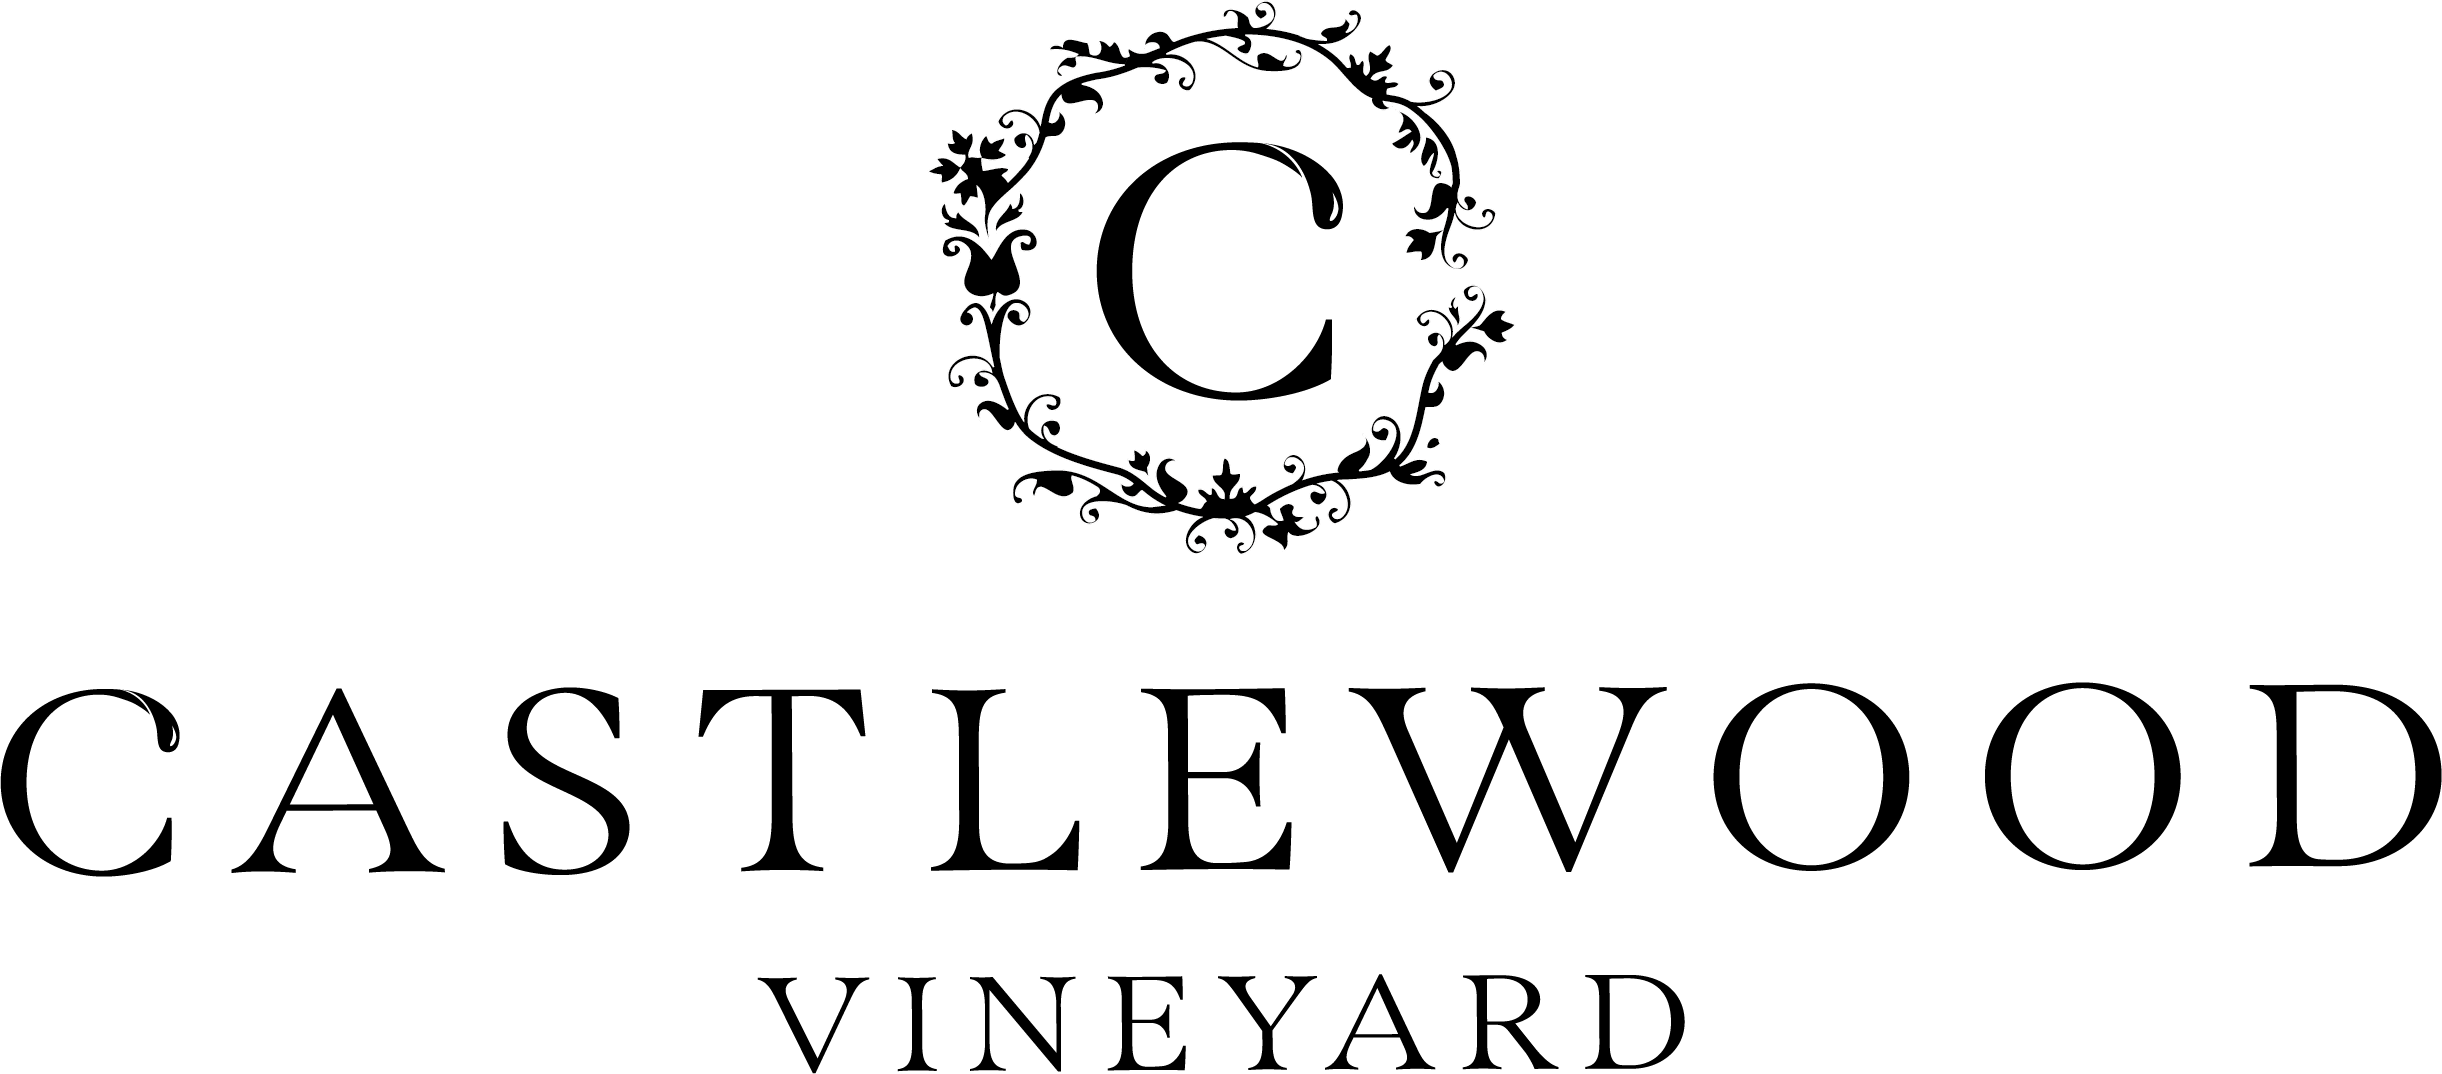 Castlewood Vineyard